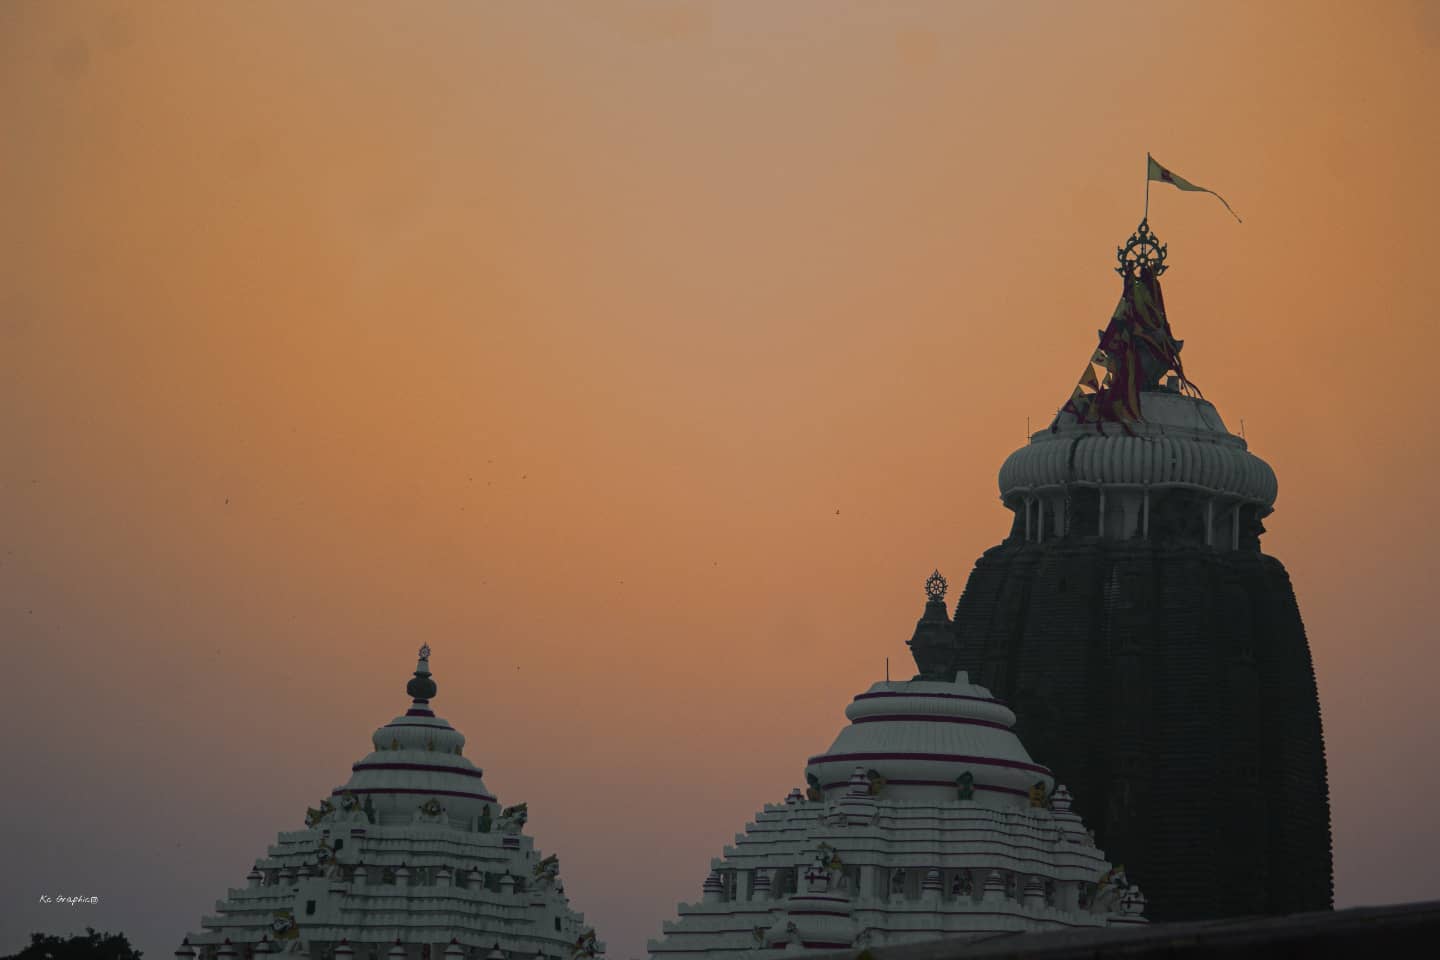 COVID-19: Nepali pilgrims advised to revise Jagannath temple visit plans to Odisha